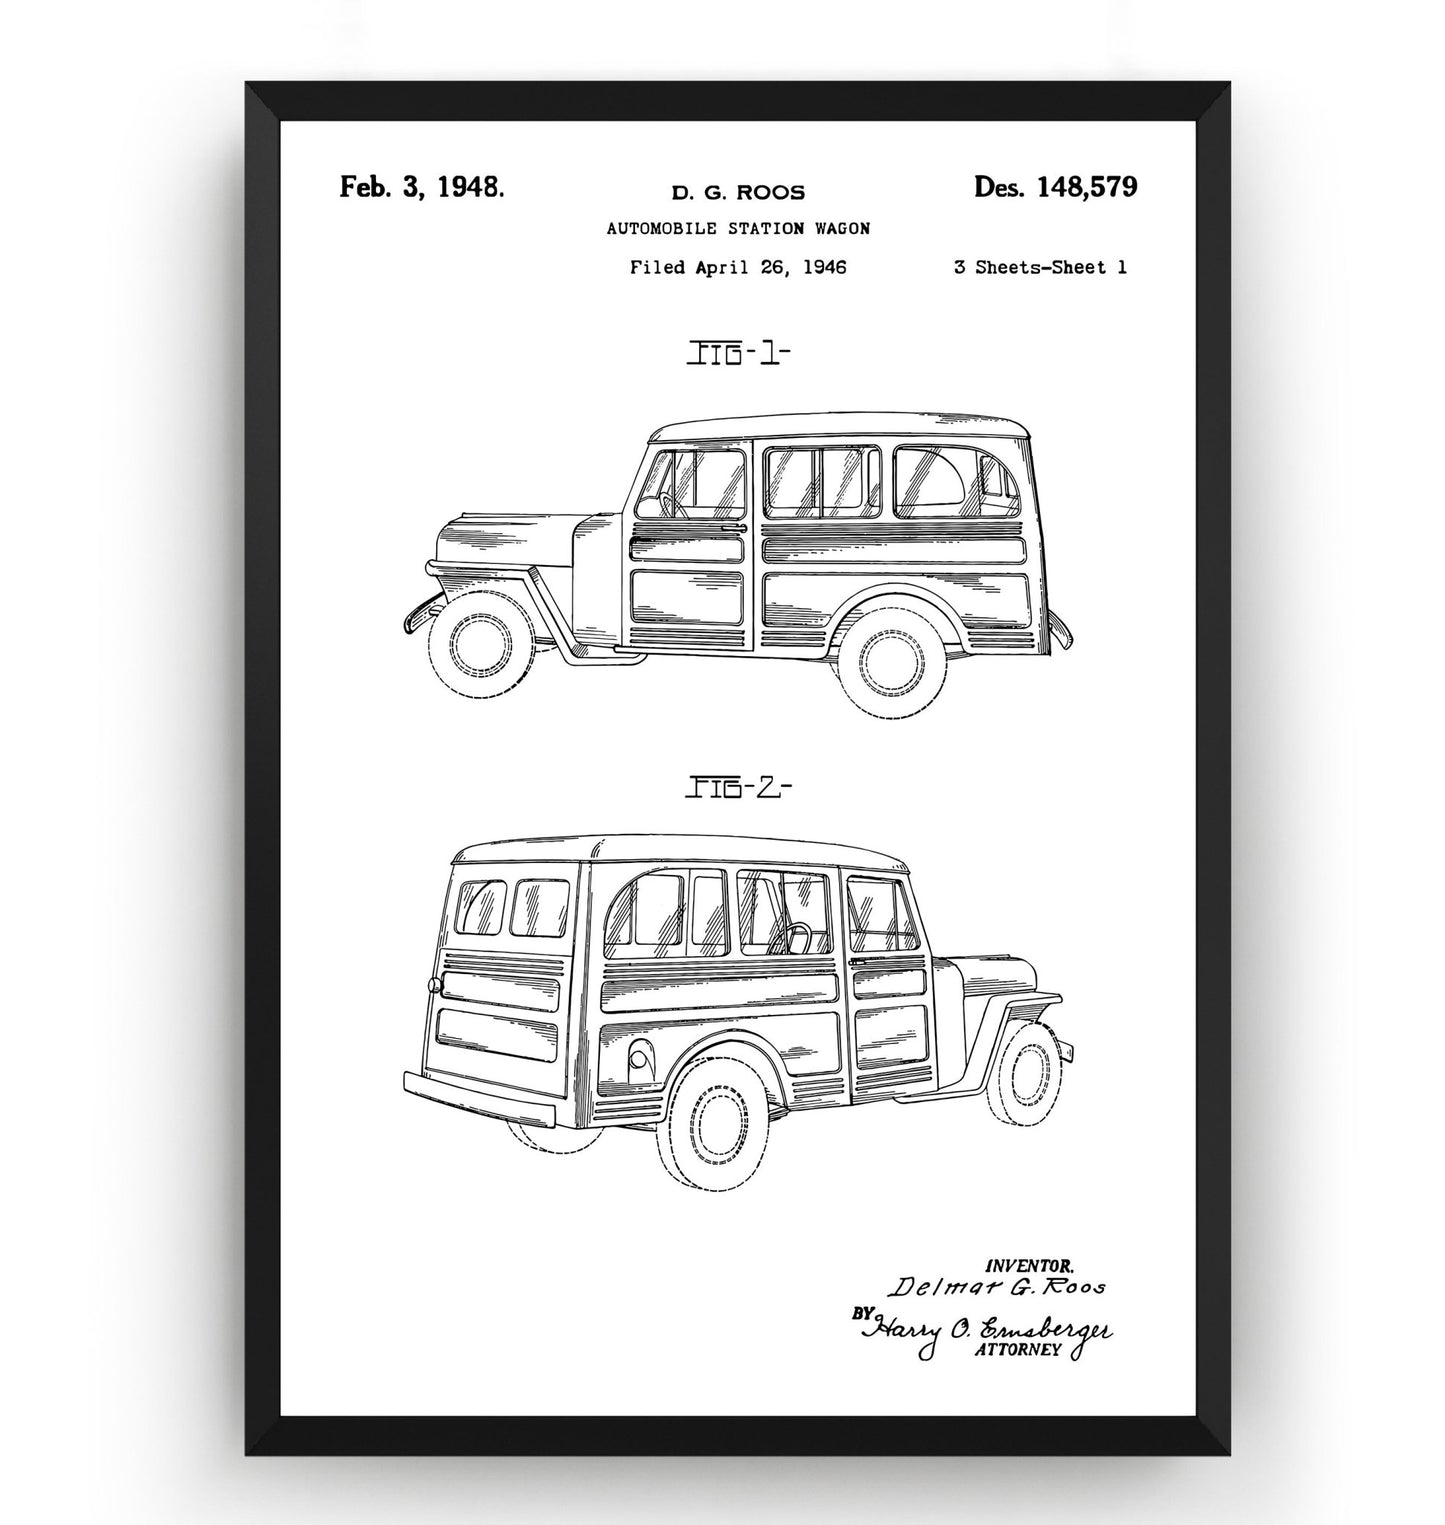 Automobile Station Wagon 1948 Patent Print - Magic Posters